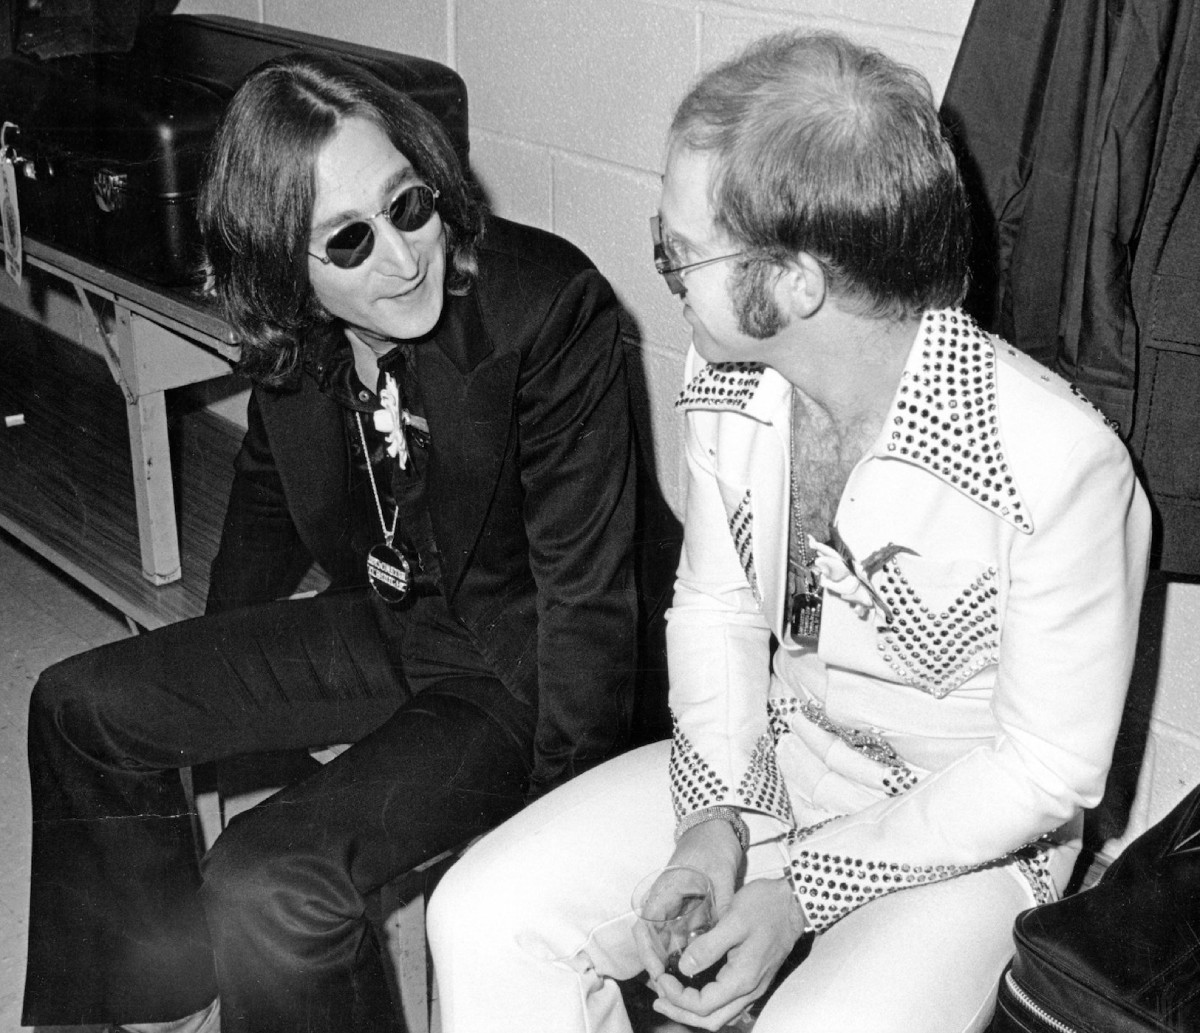 John Lennon e Elton John eram amigos